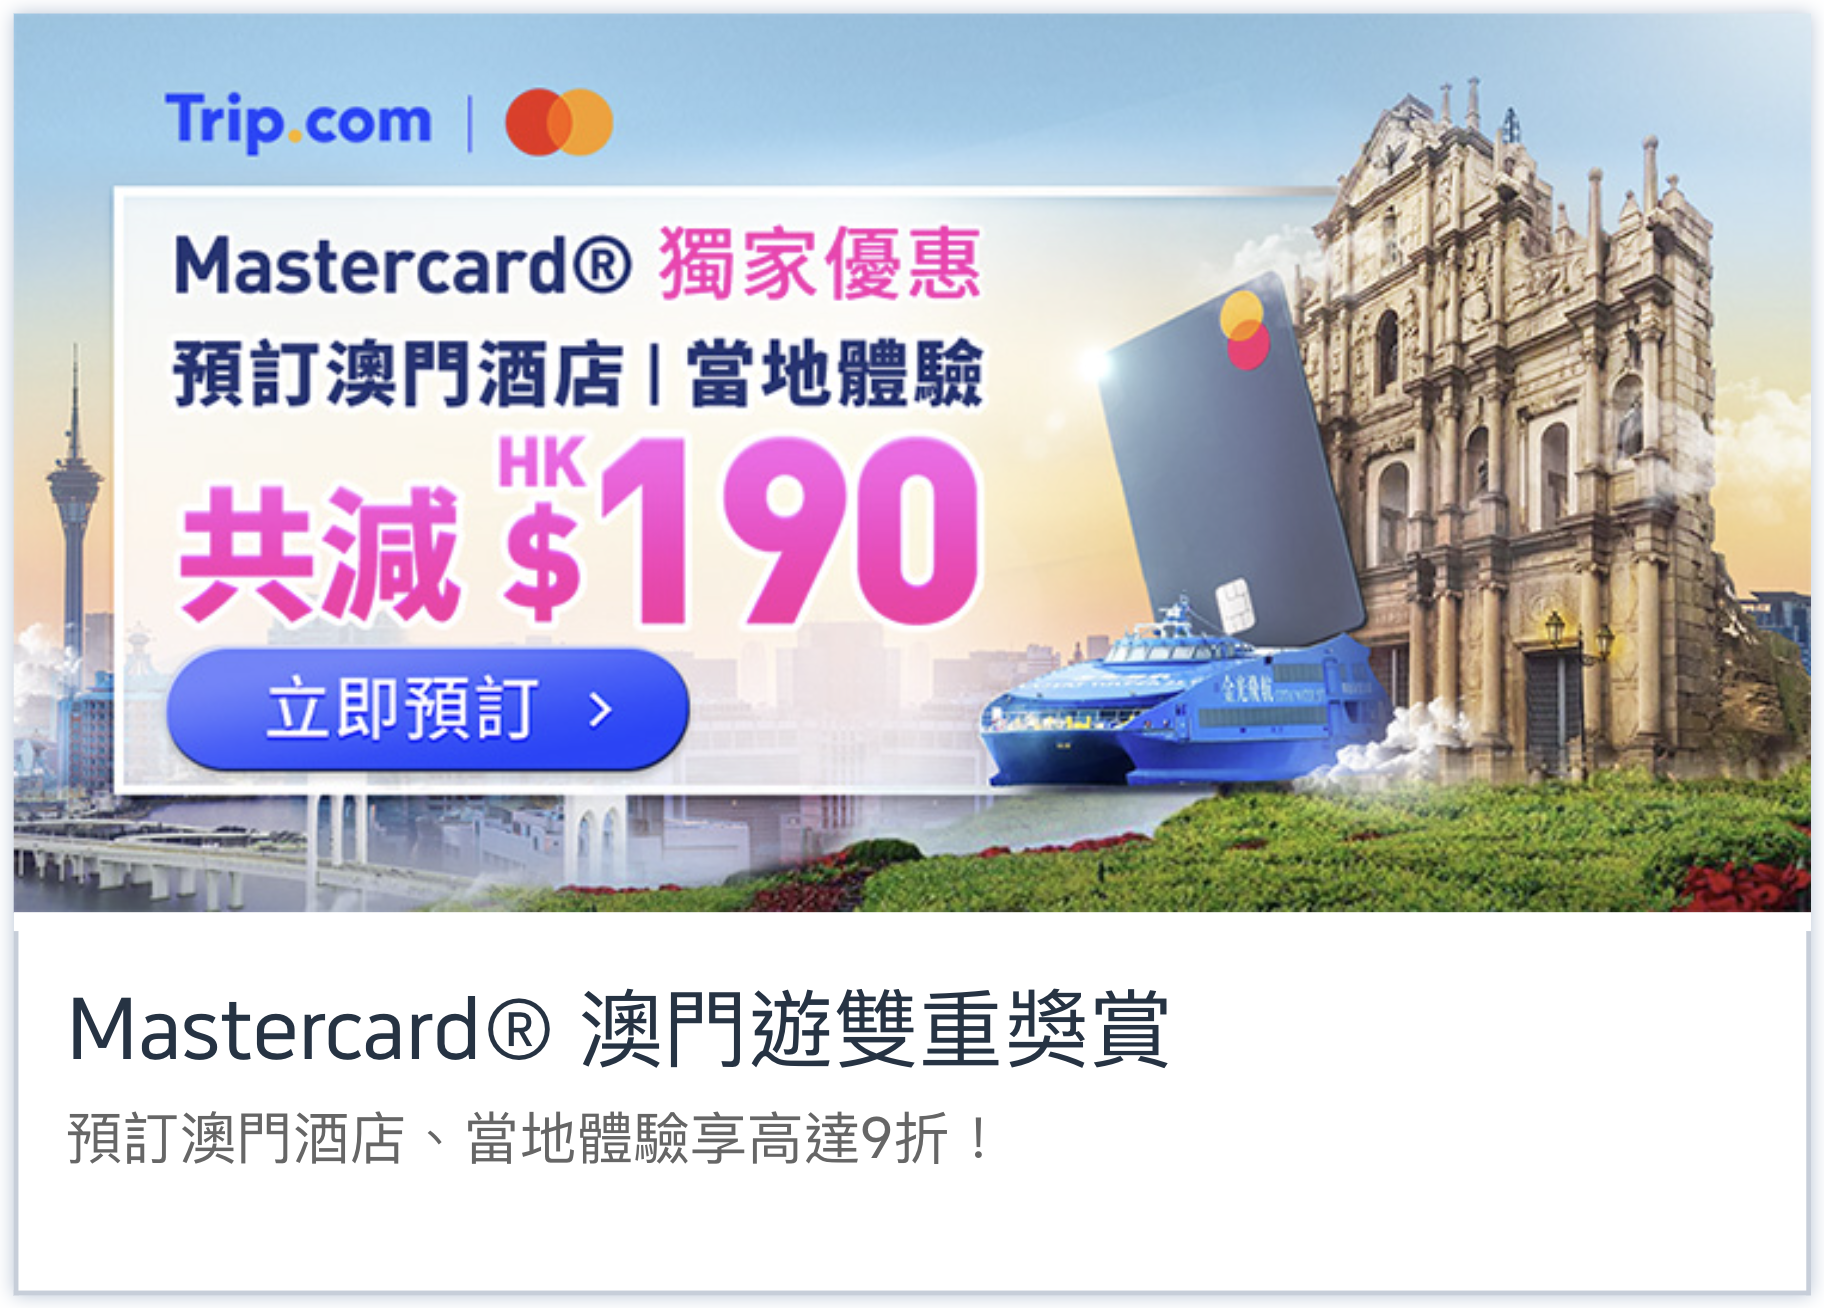 Mastercard Trip.com 旅遊 行程 酒店 限時 優惠 折扣 代碼 優惠碼 Promo Discount Coupon Code